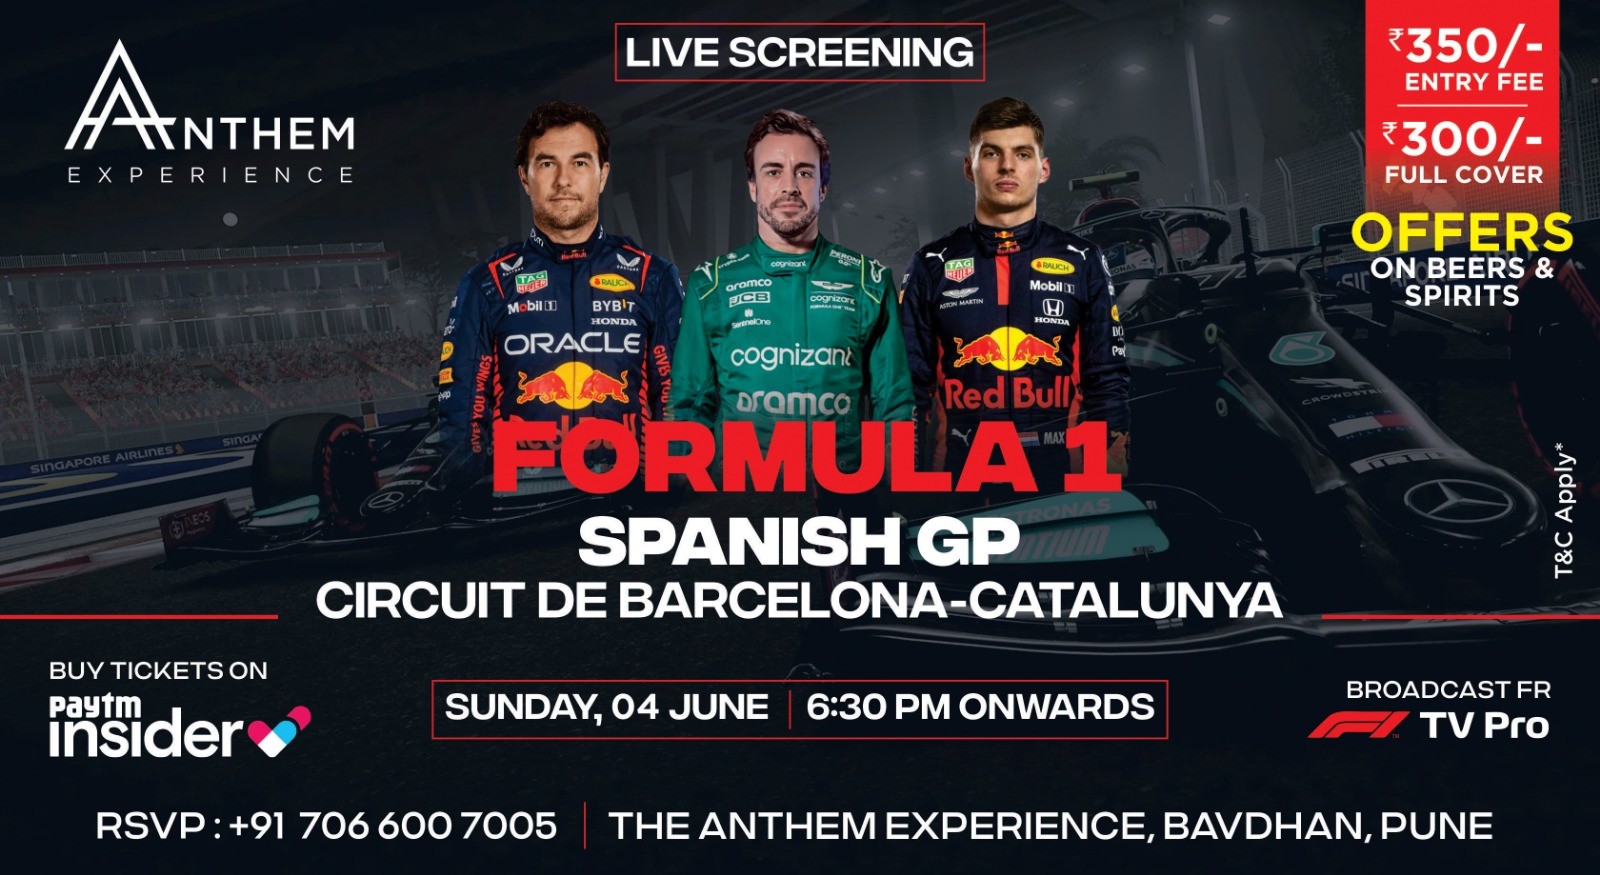 F1-Spanish GP- Circuit De Barcelona-Catalunya at The Anthem Experience